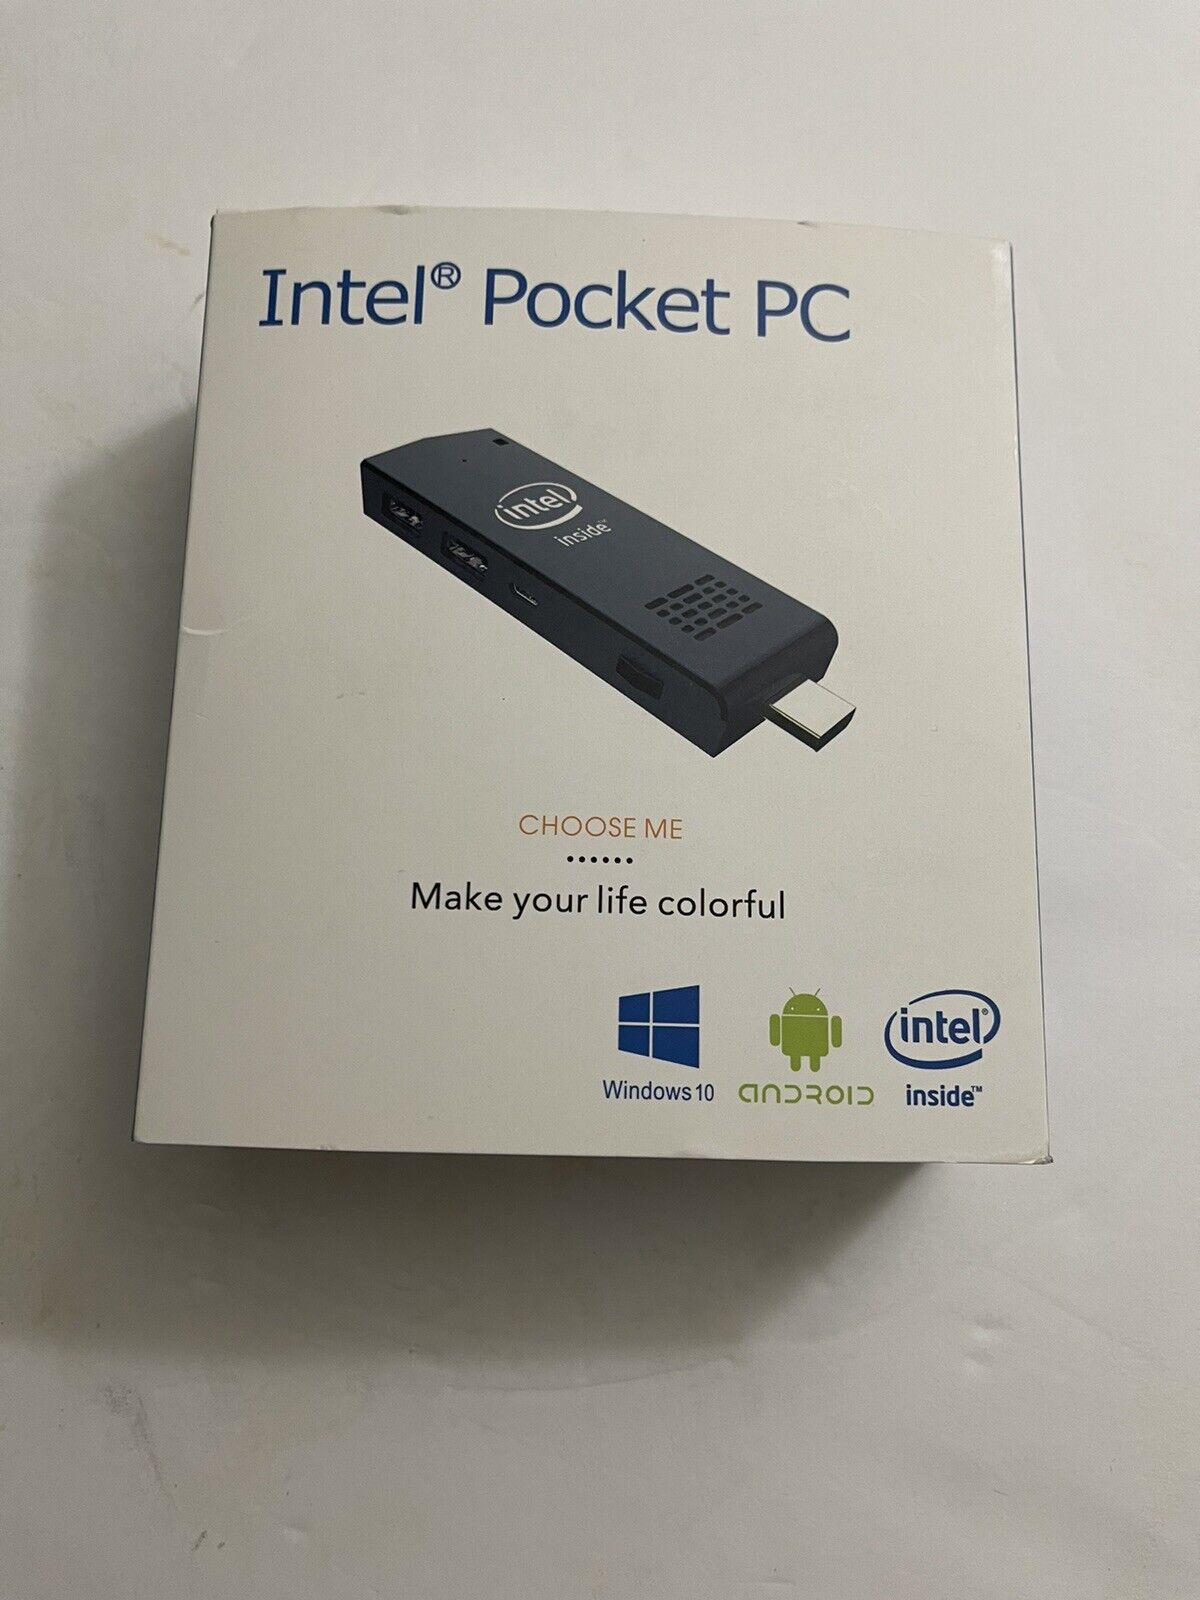 Intel Pocket PC Windows 10 Android Intel Inside